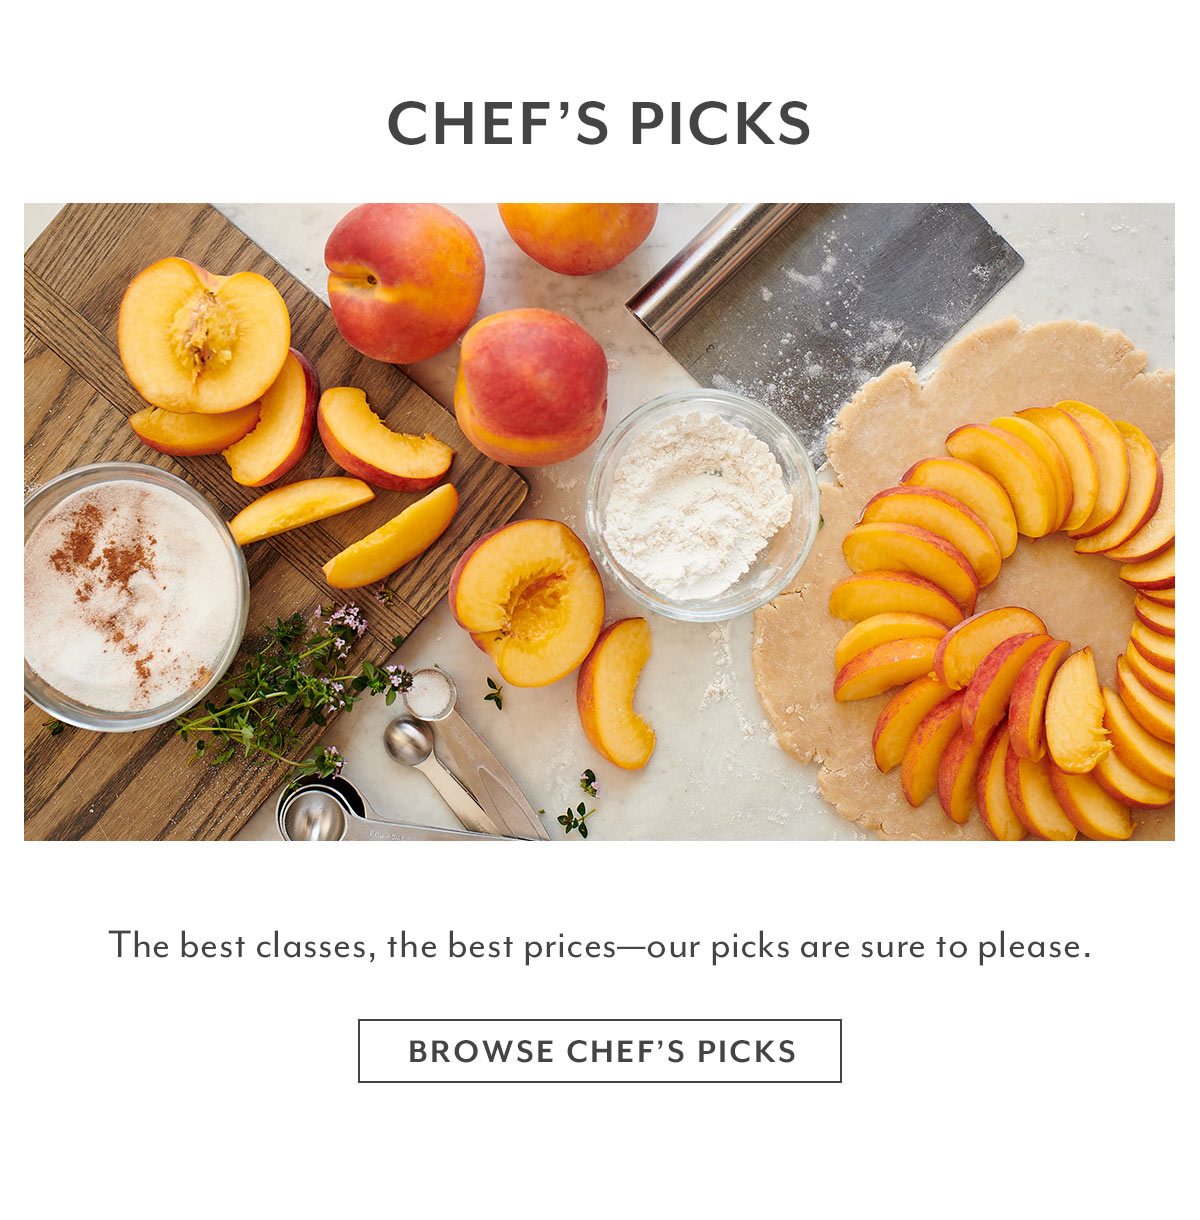 Browse Chef's Picks